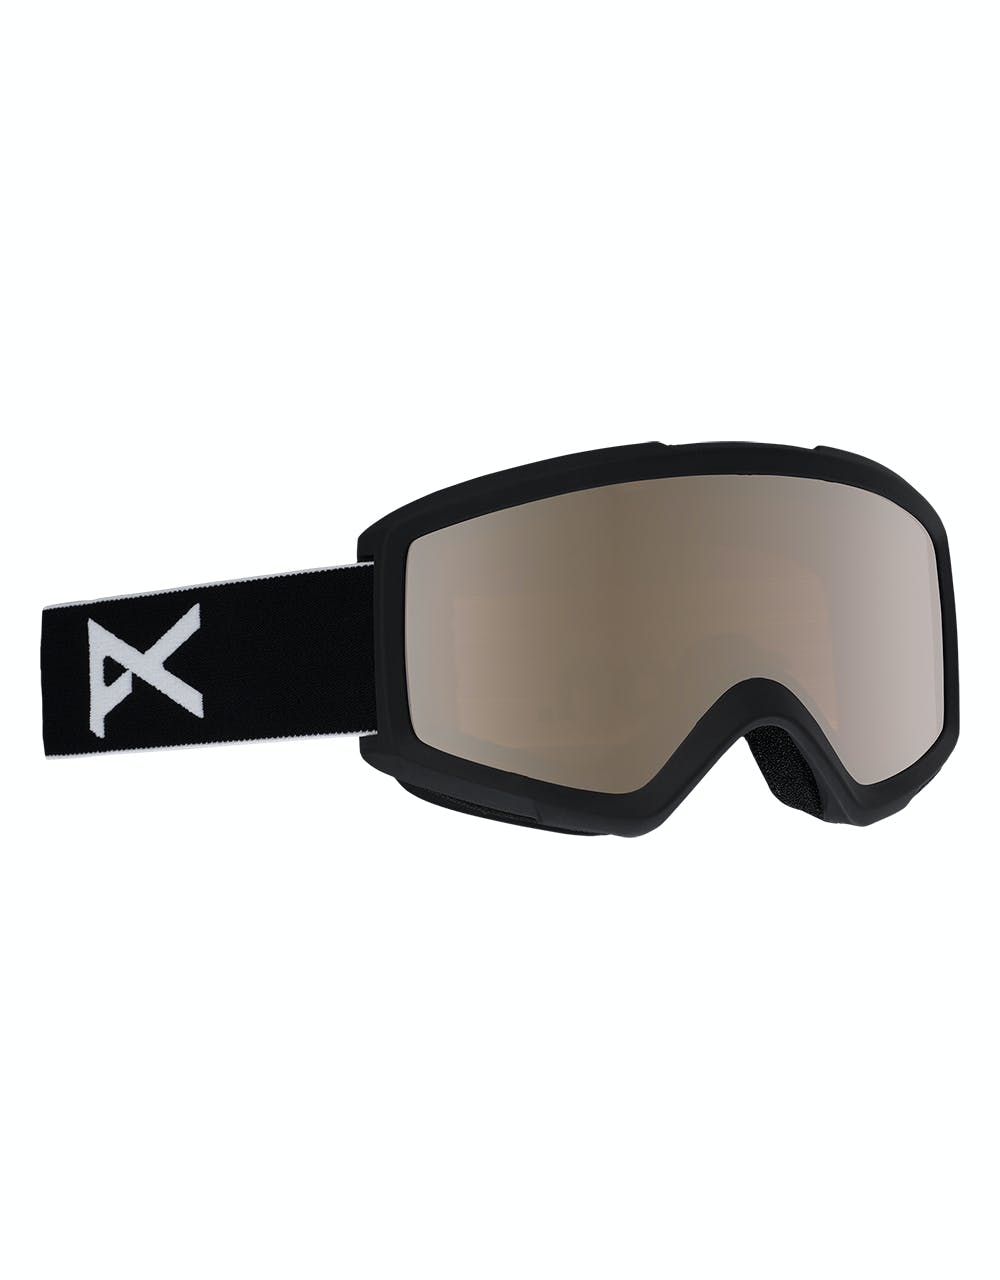 Anon Helix 2.0 Snowboard Goggles - Black/Silver Amber